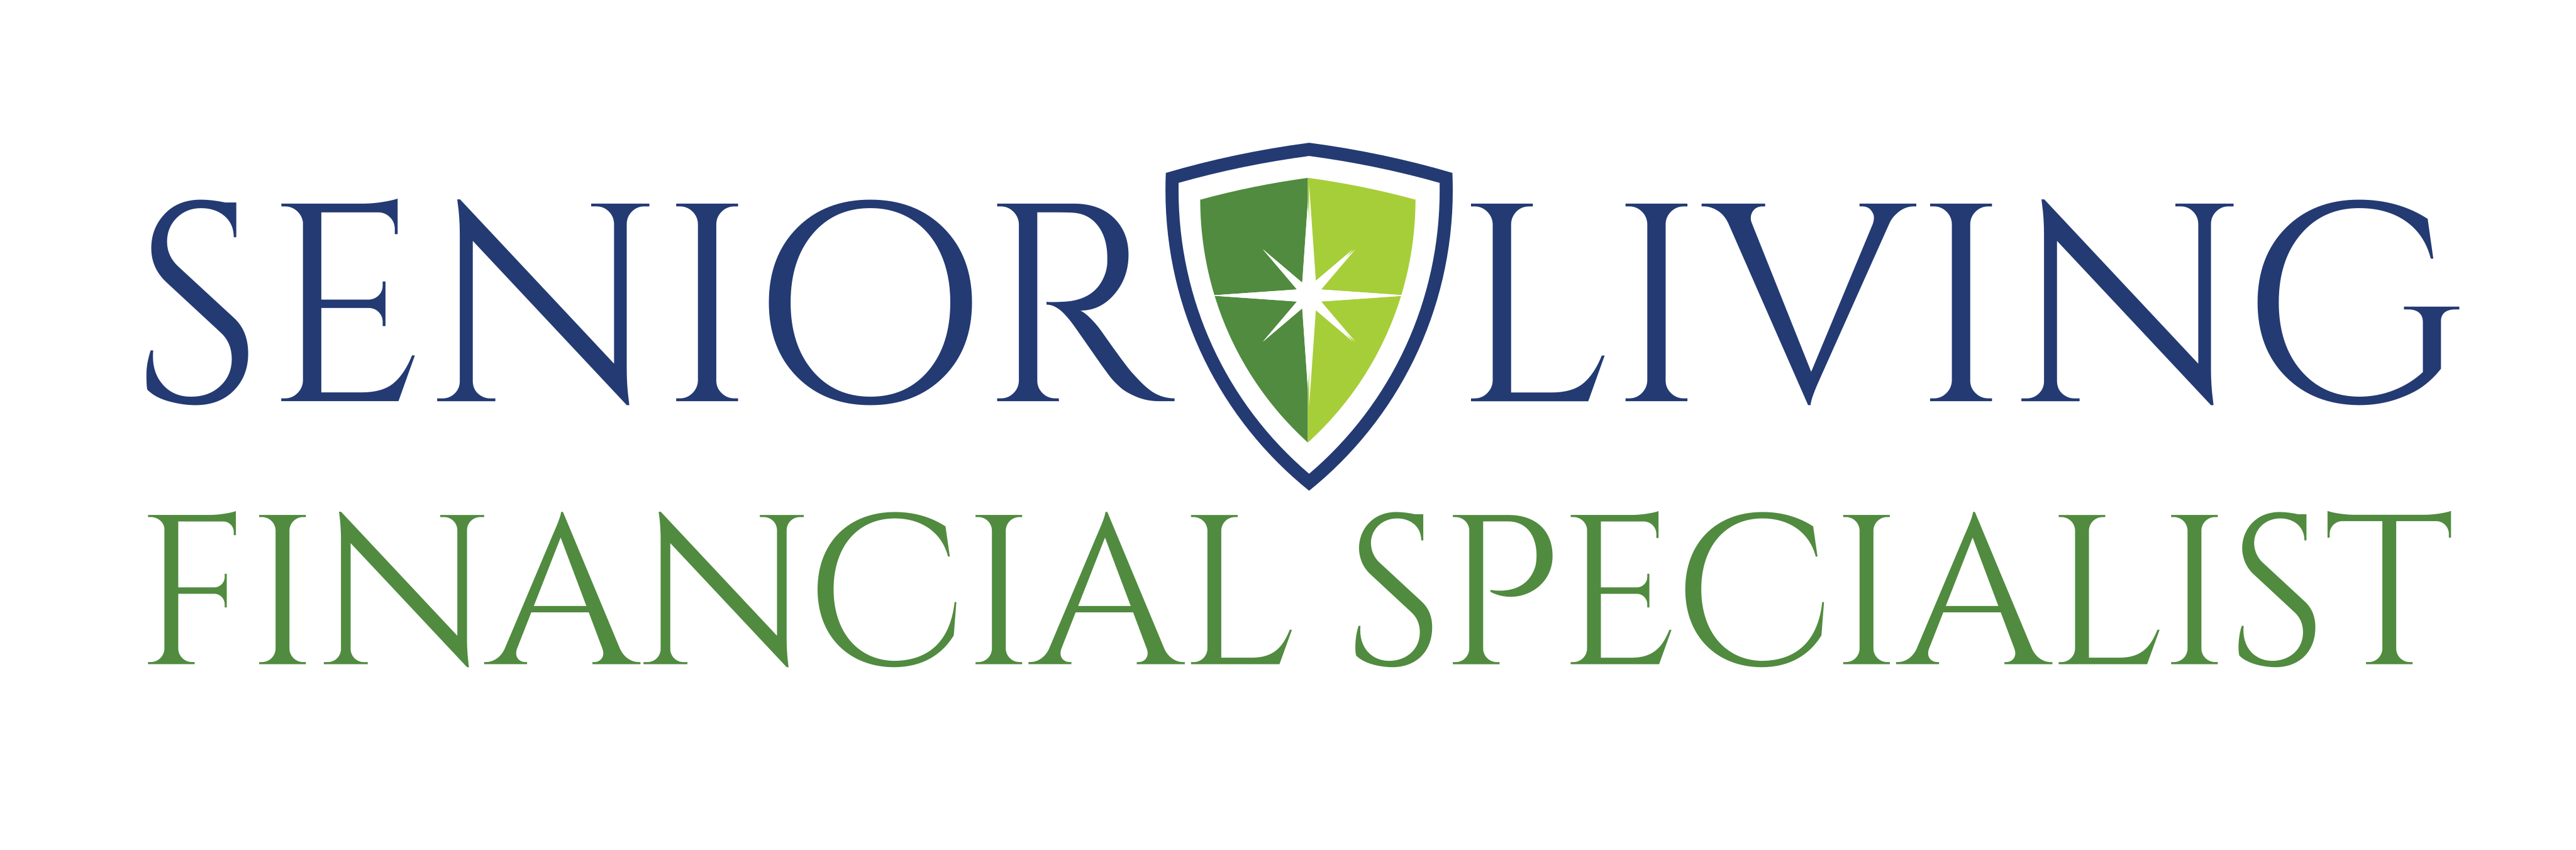 Senior Living Financial Specialist